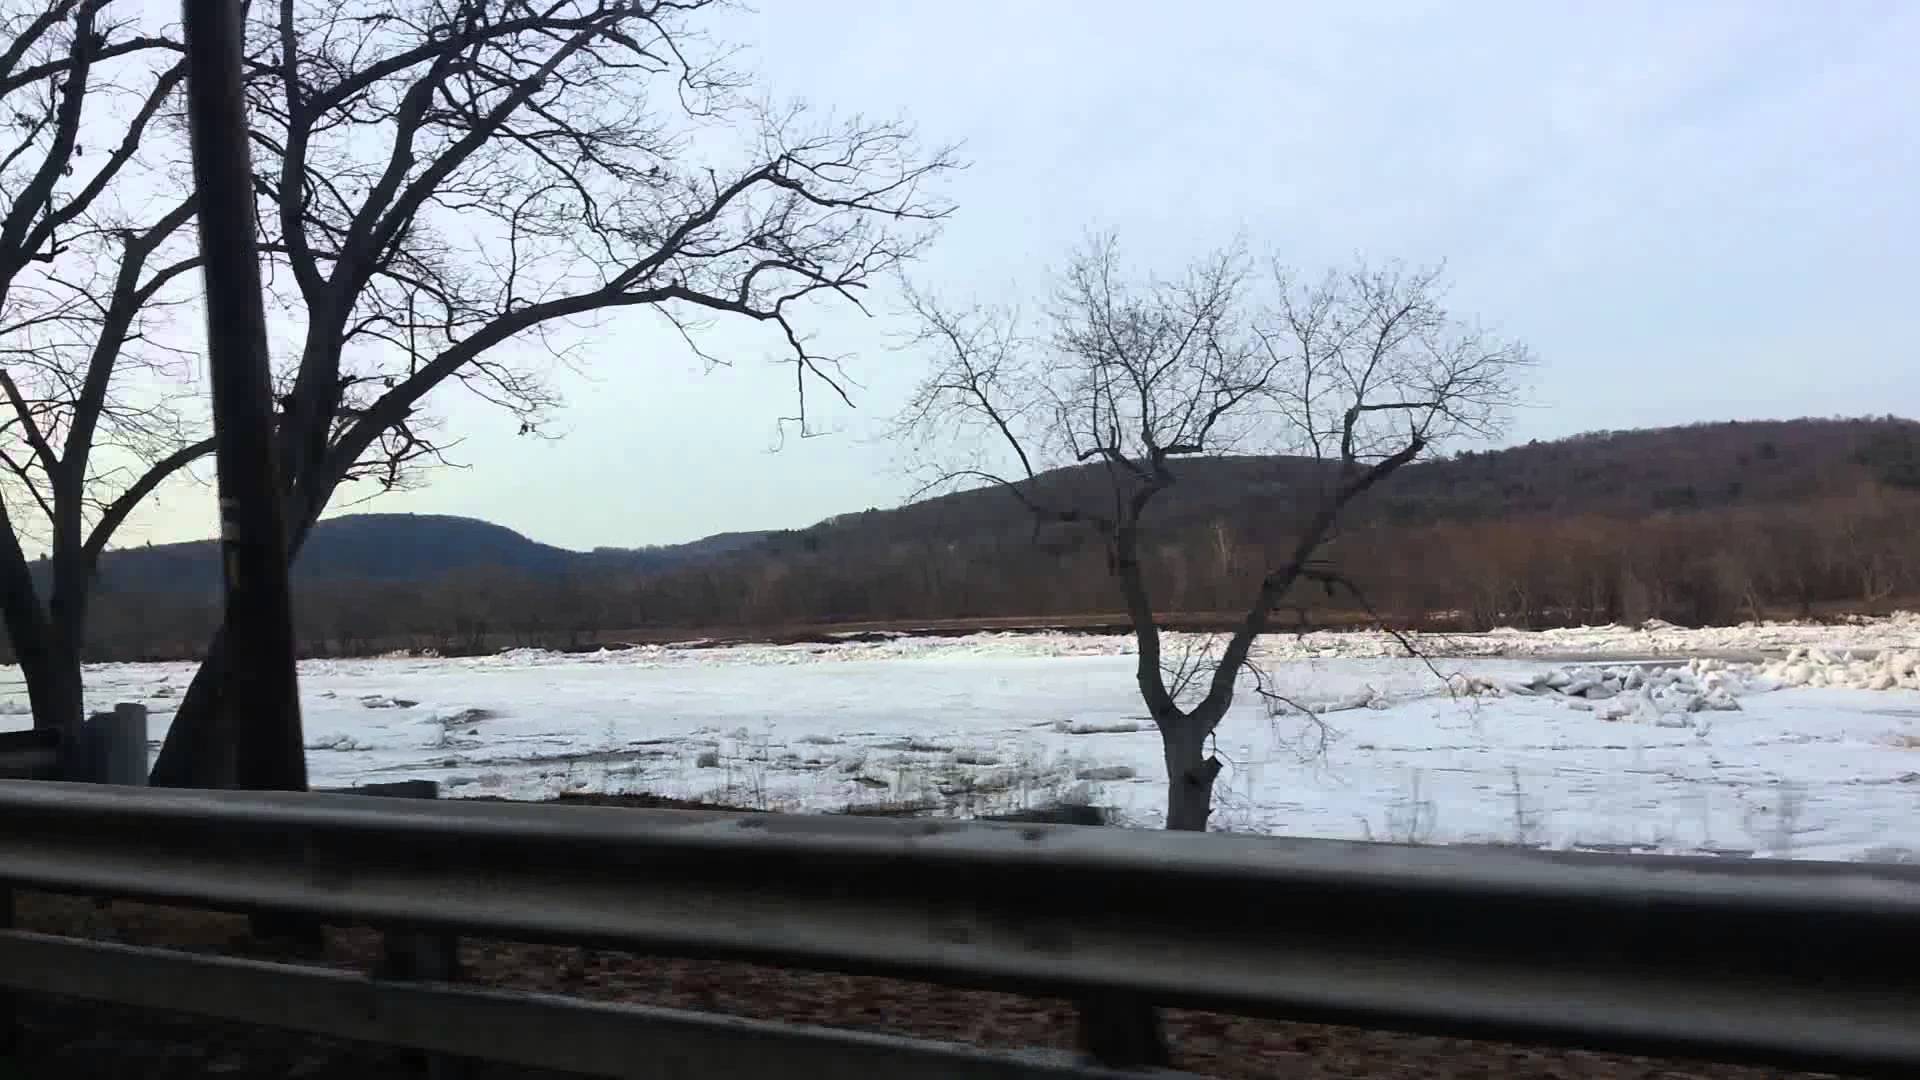 Susquehanna River at Harding PA Ice Jam - YouTube